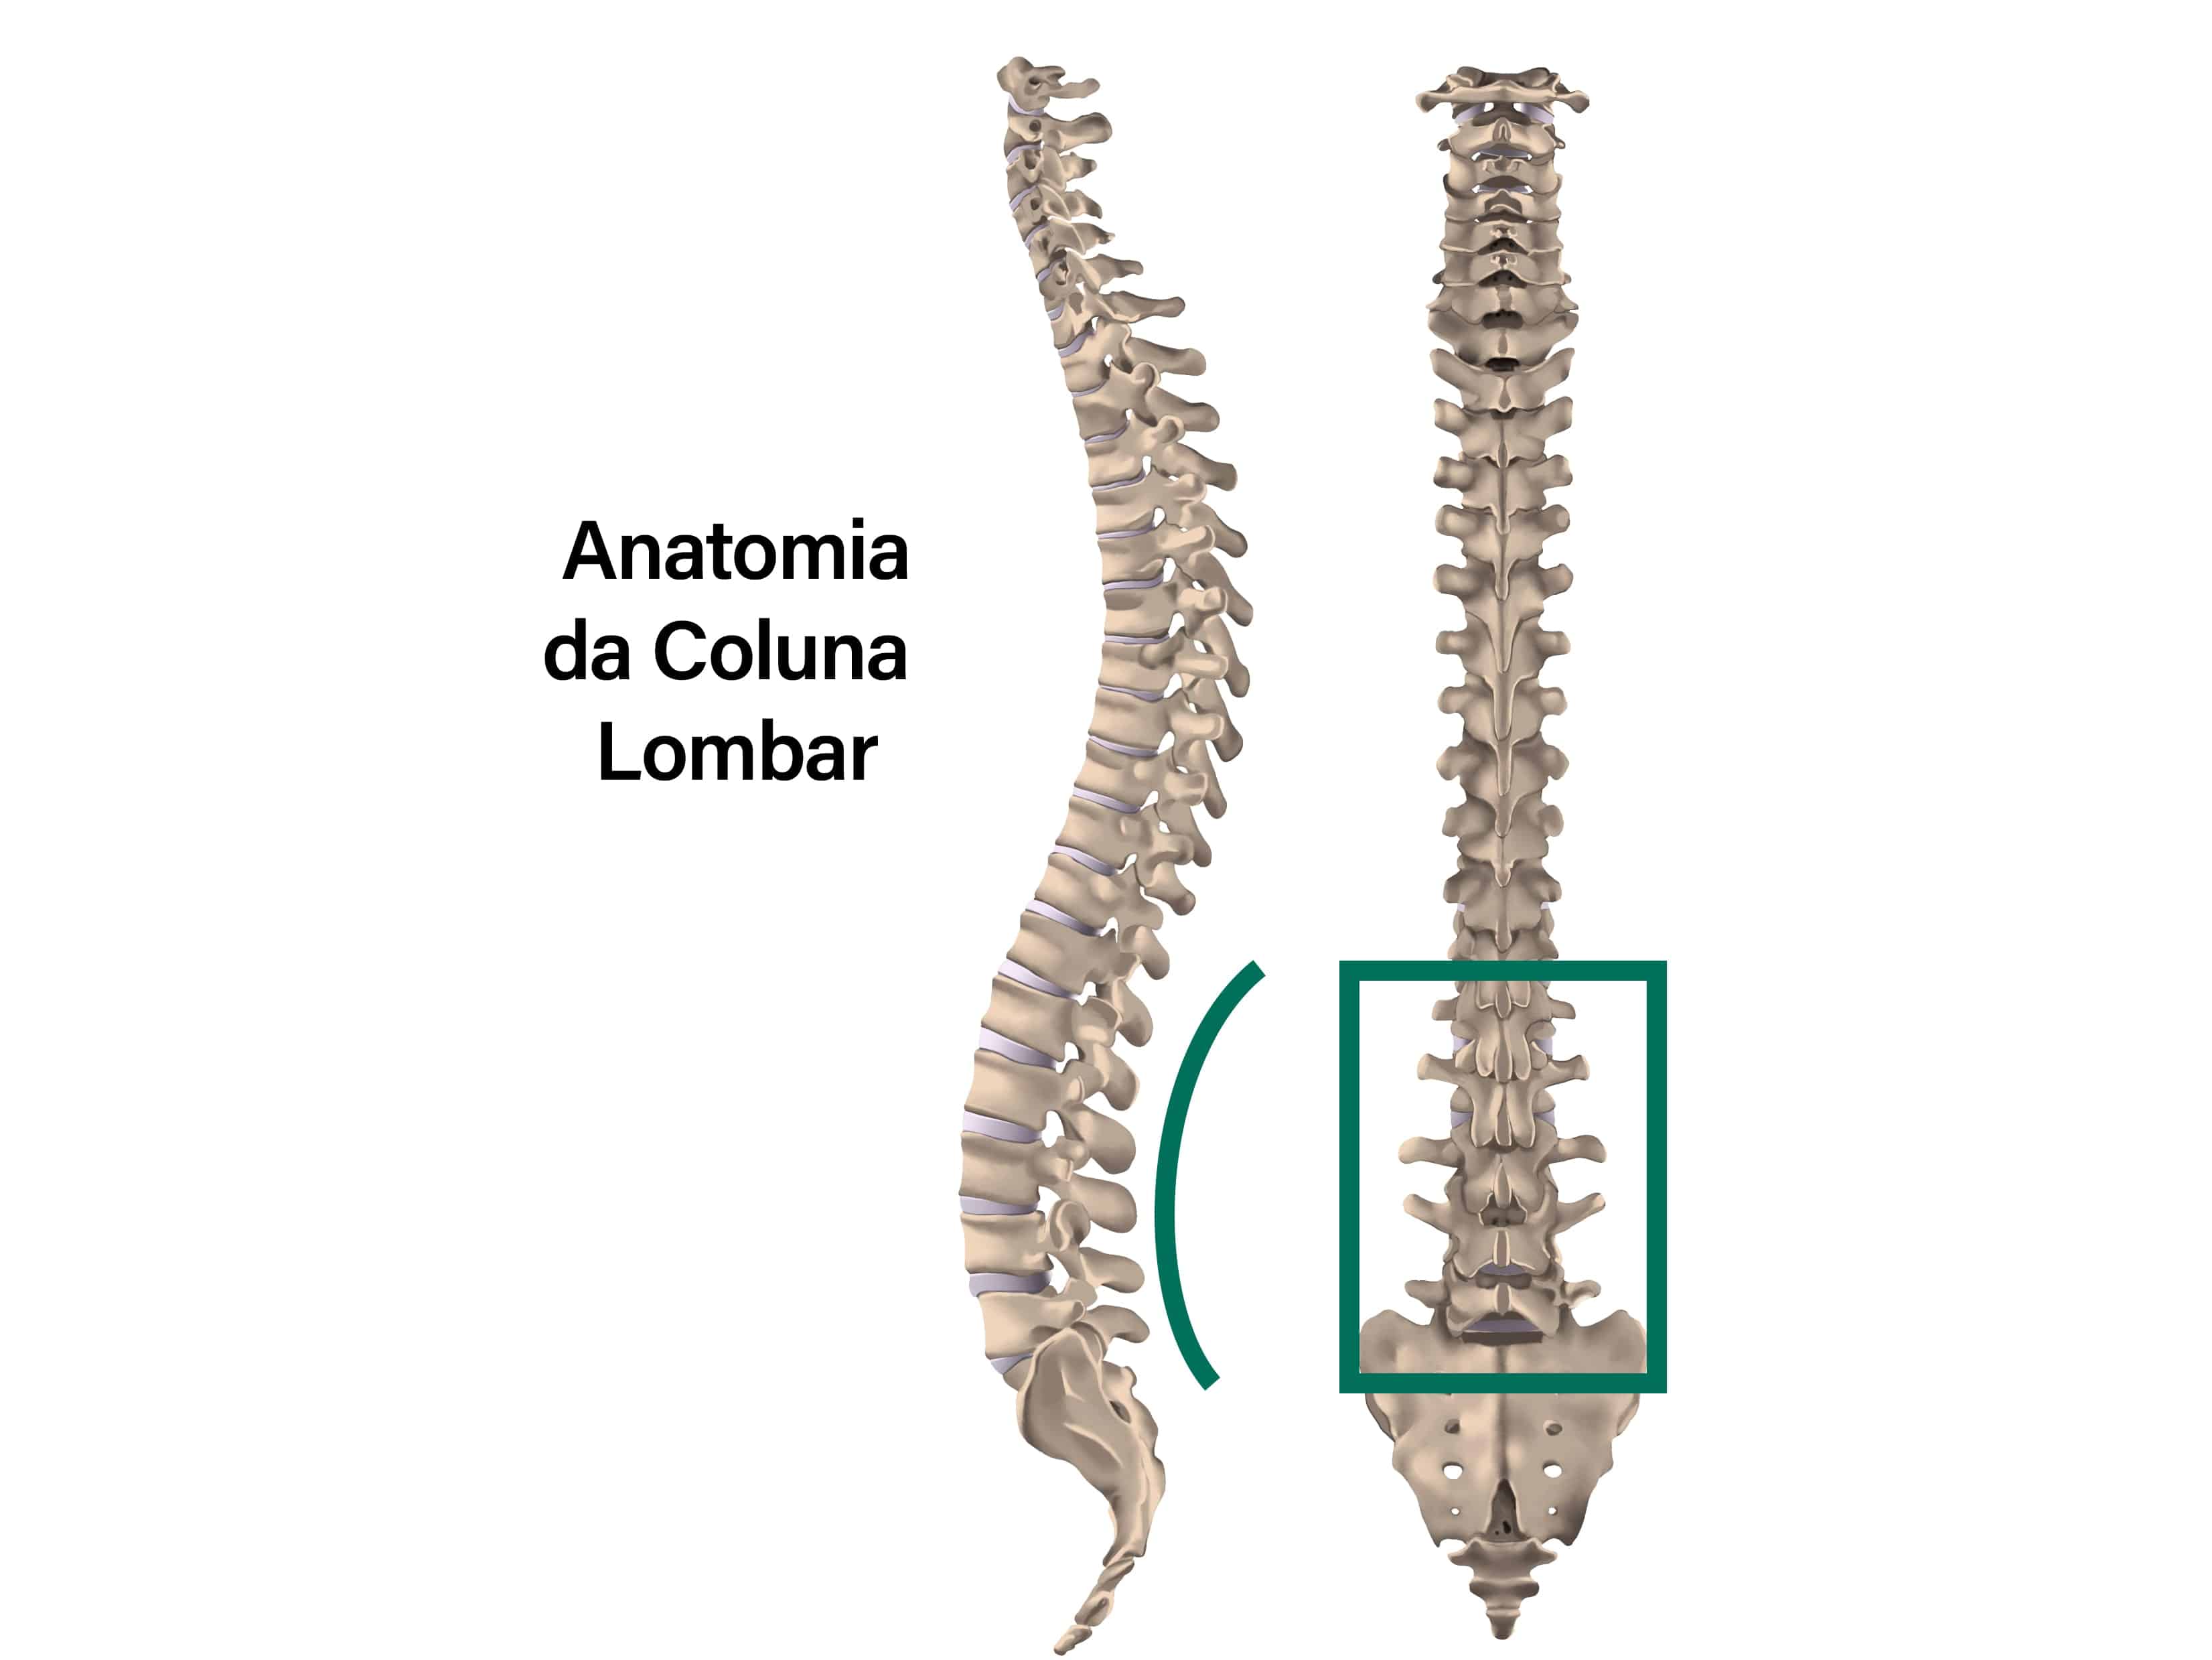 Anatomia da Coluna Vertebral